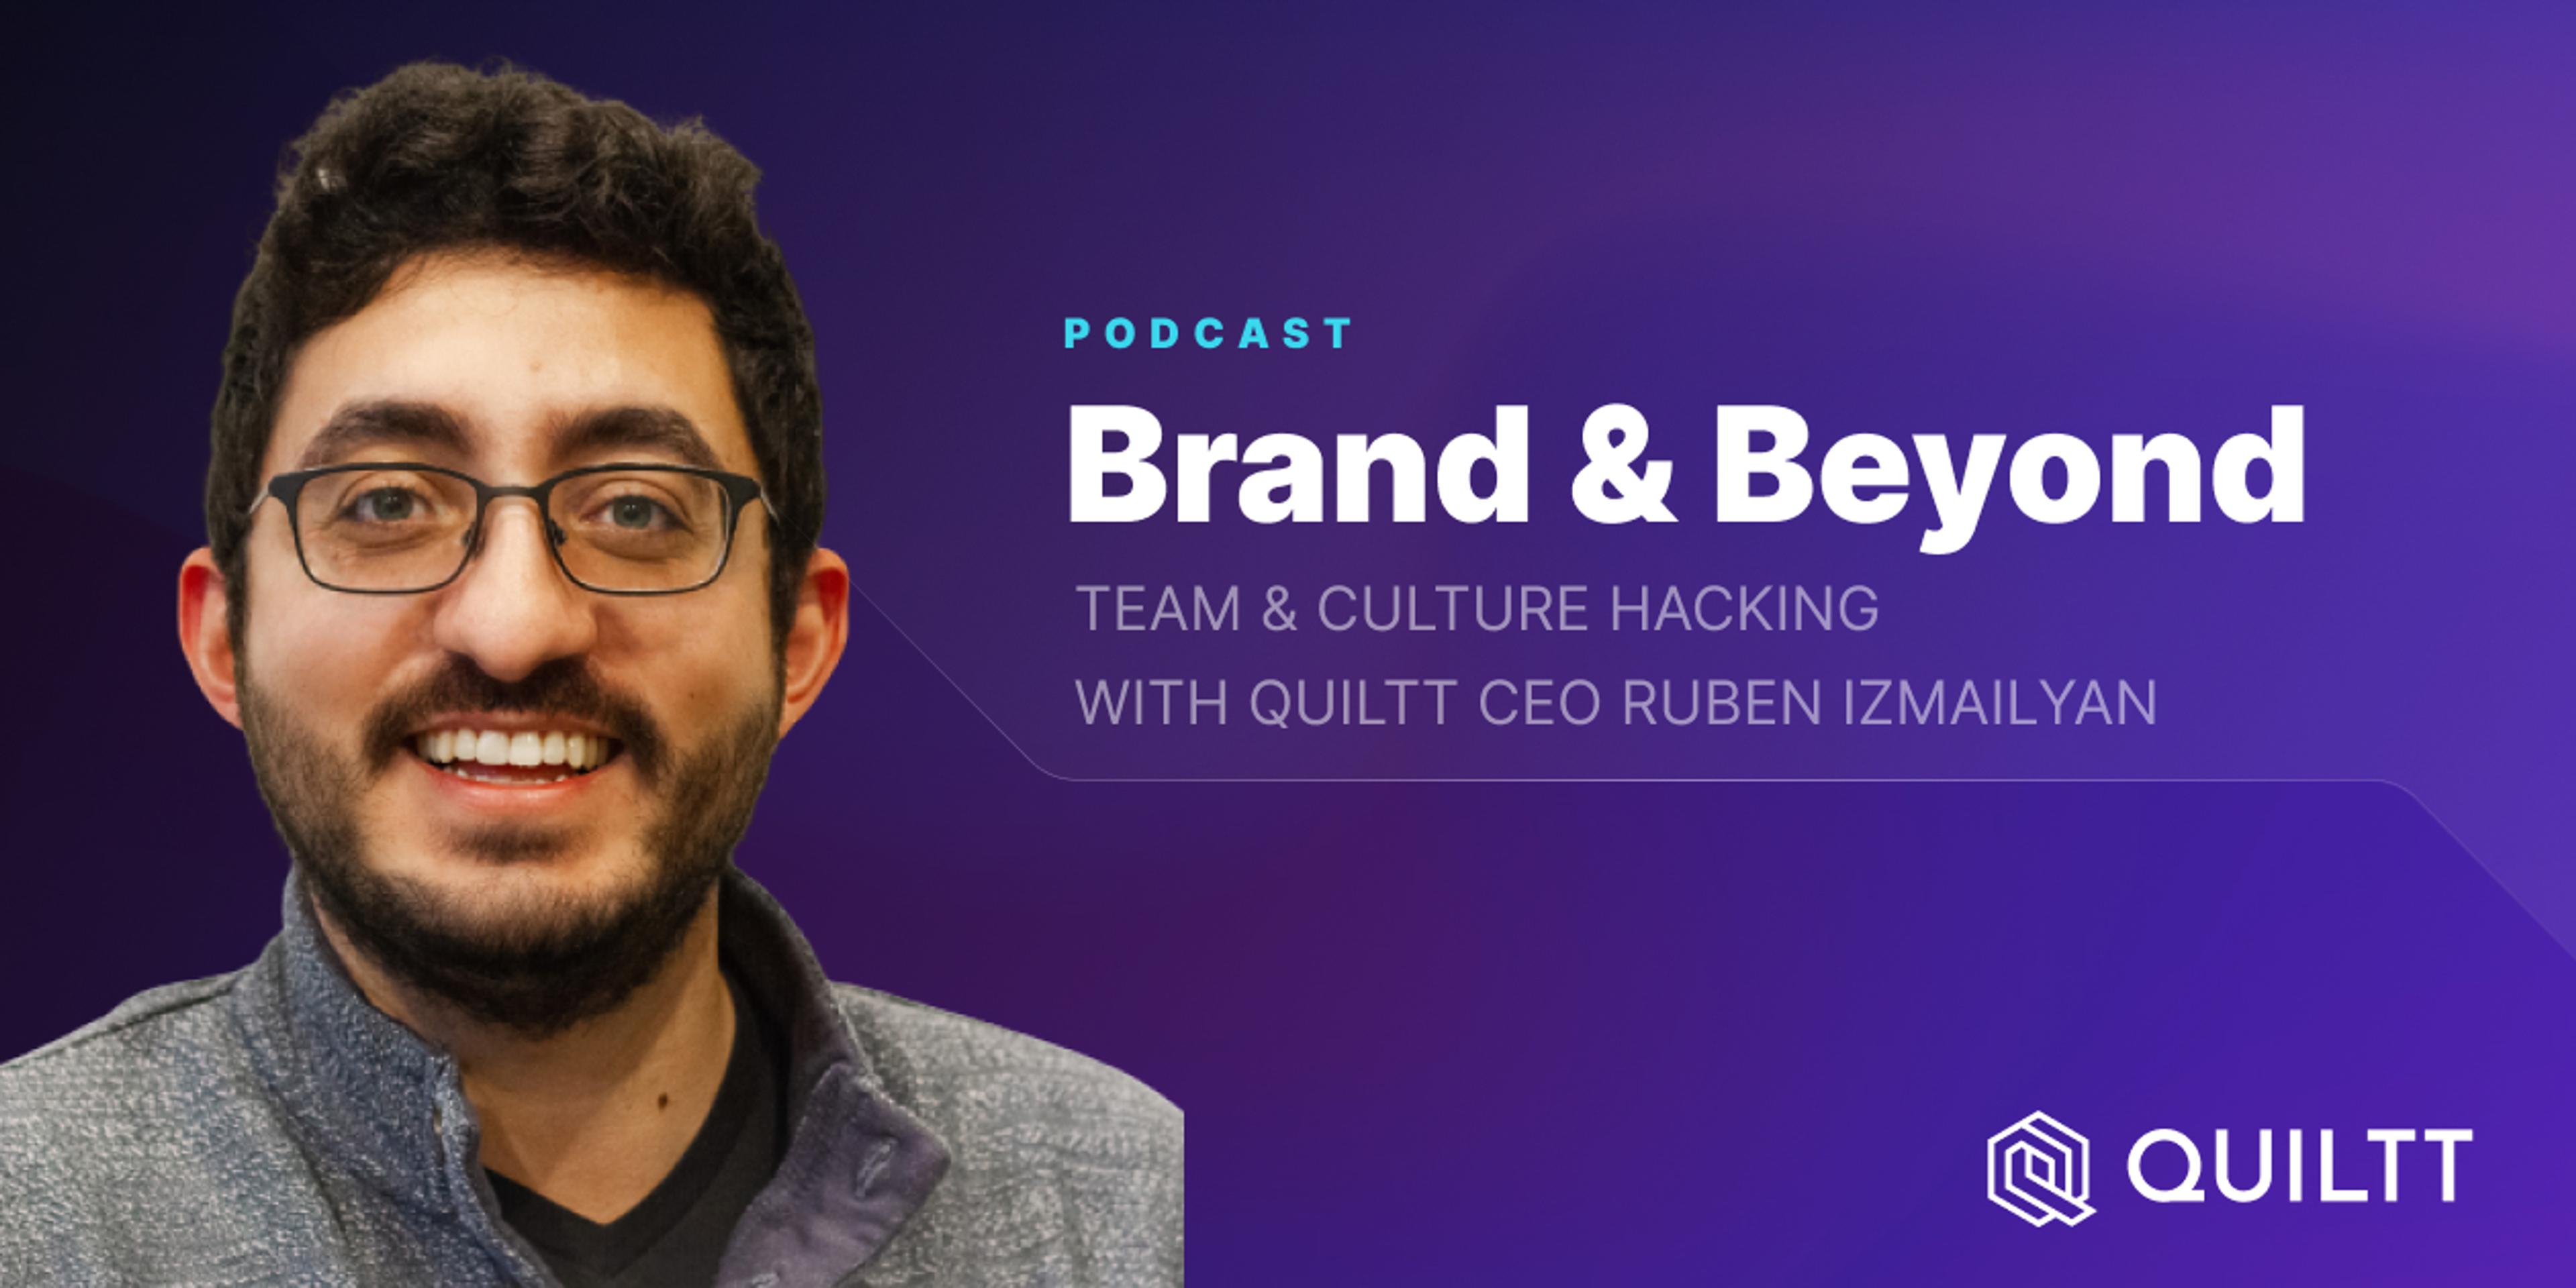 Podcast: Brand & Beyond, Quiltt CEO & Co-founder Ruben Izmailyan Post Image